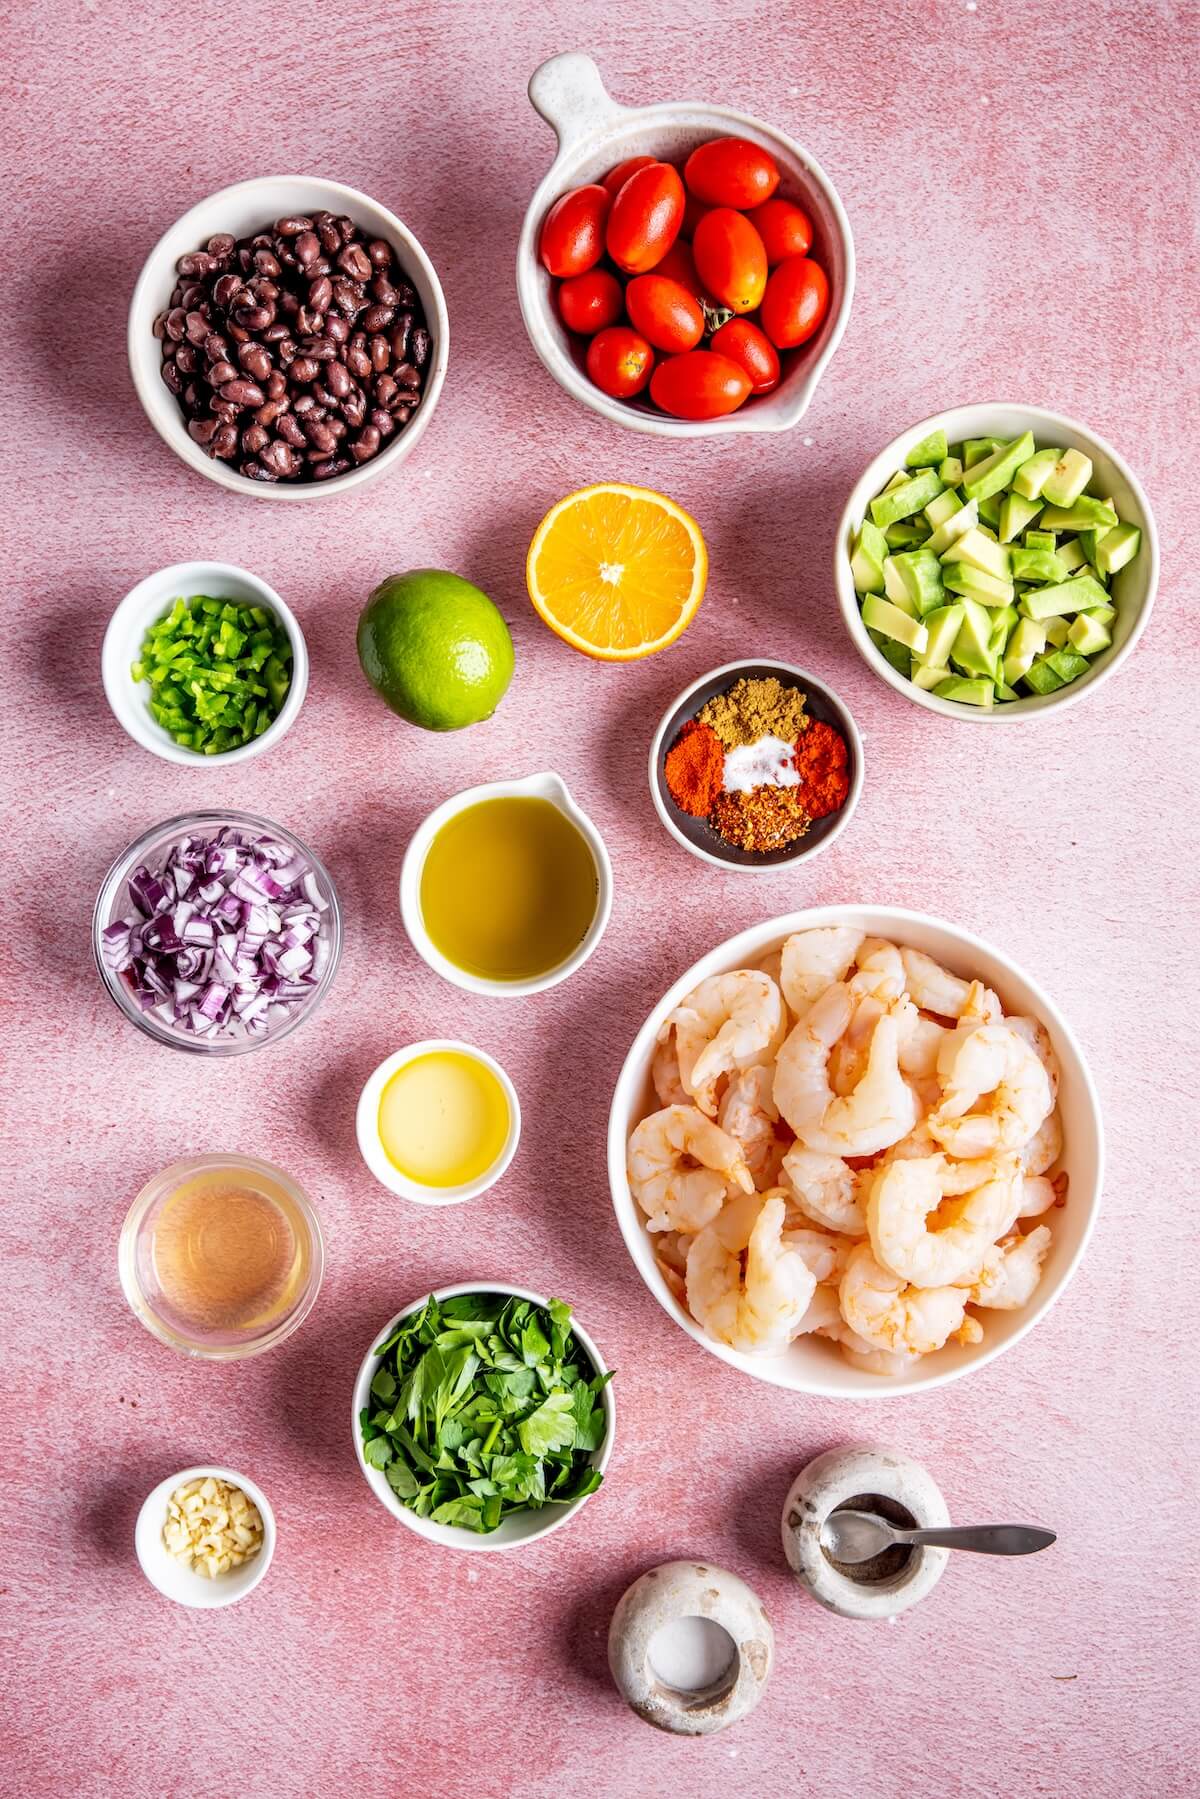 Zesty Shrimp and Black Bean Salad Ingredients - Olivia Adriance